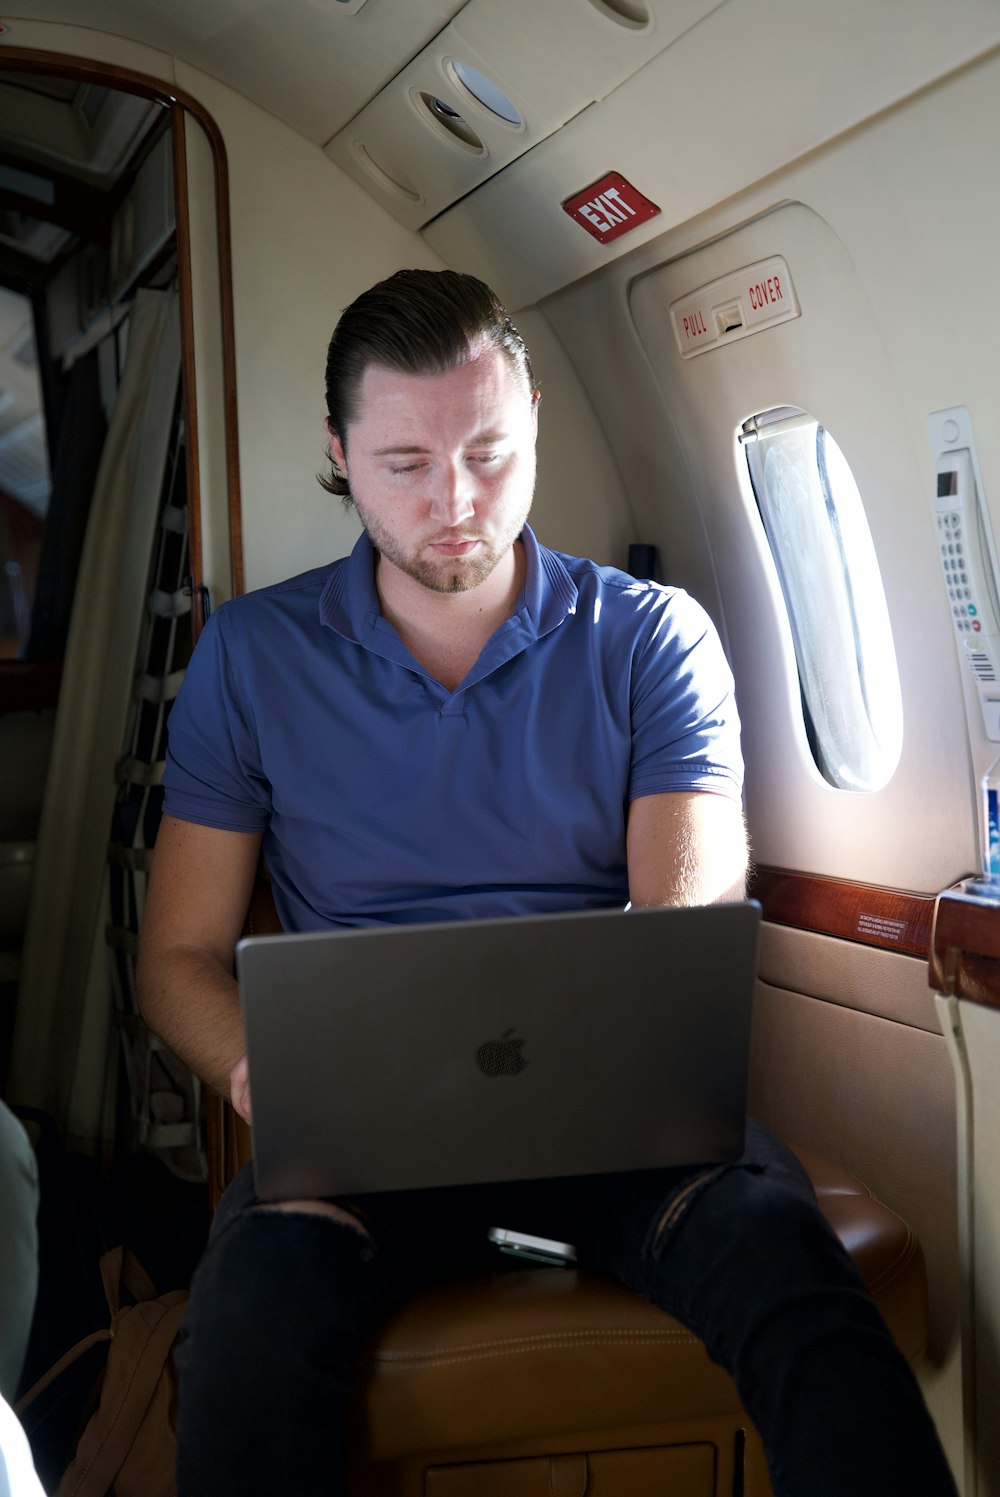 un uomo seduto su un aereo che usa un computer portatile